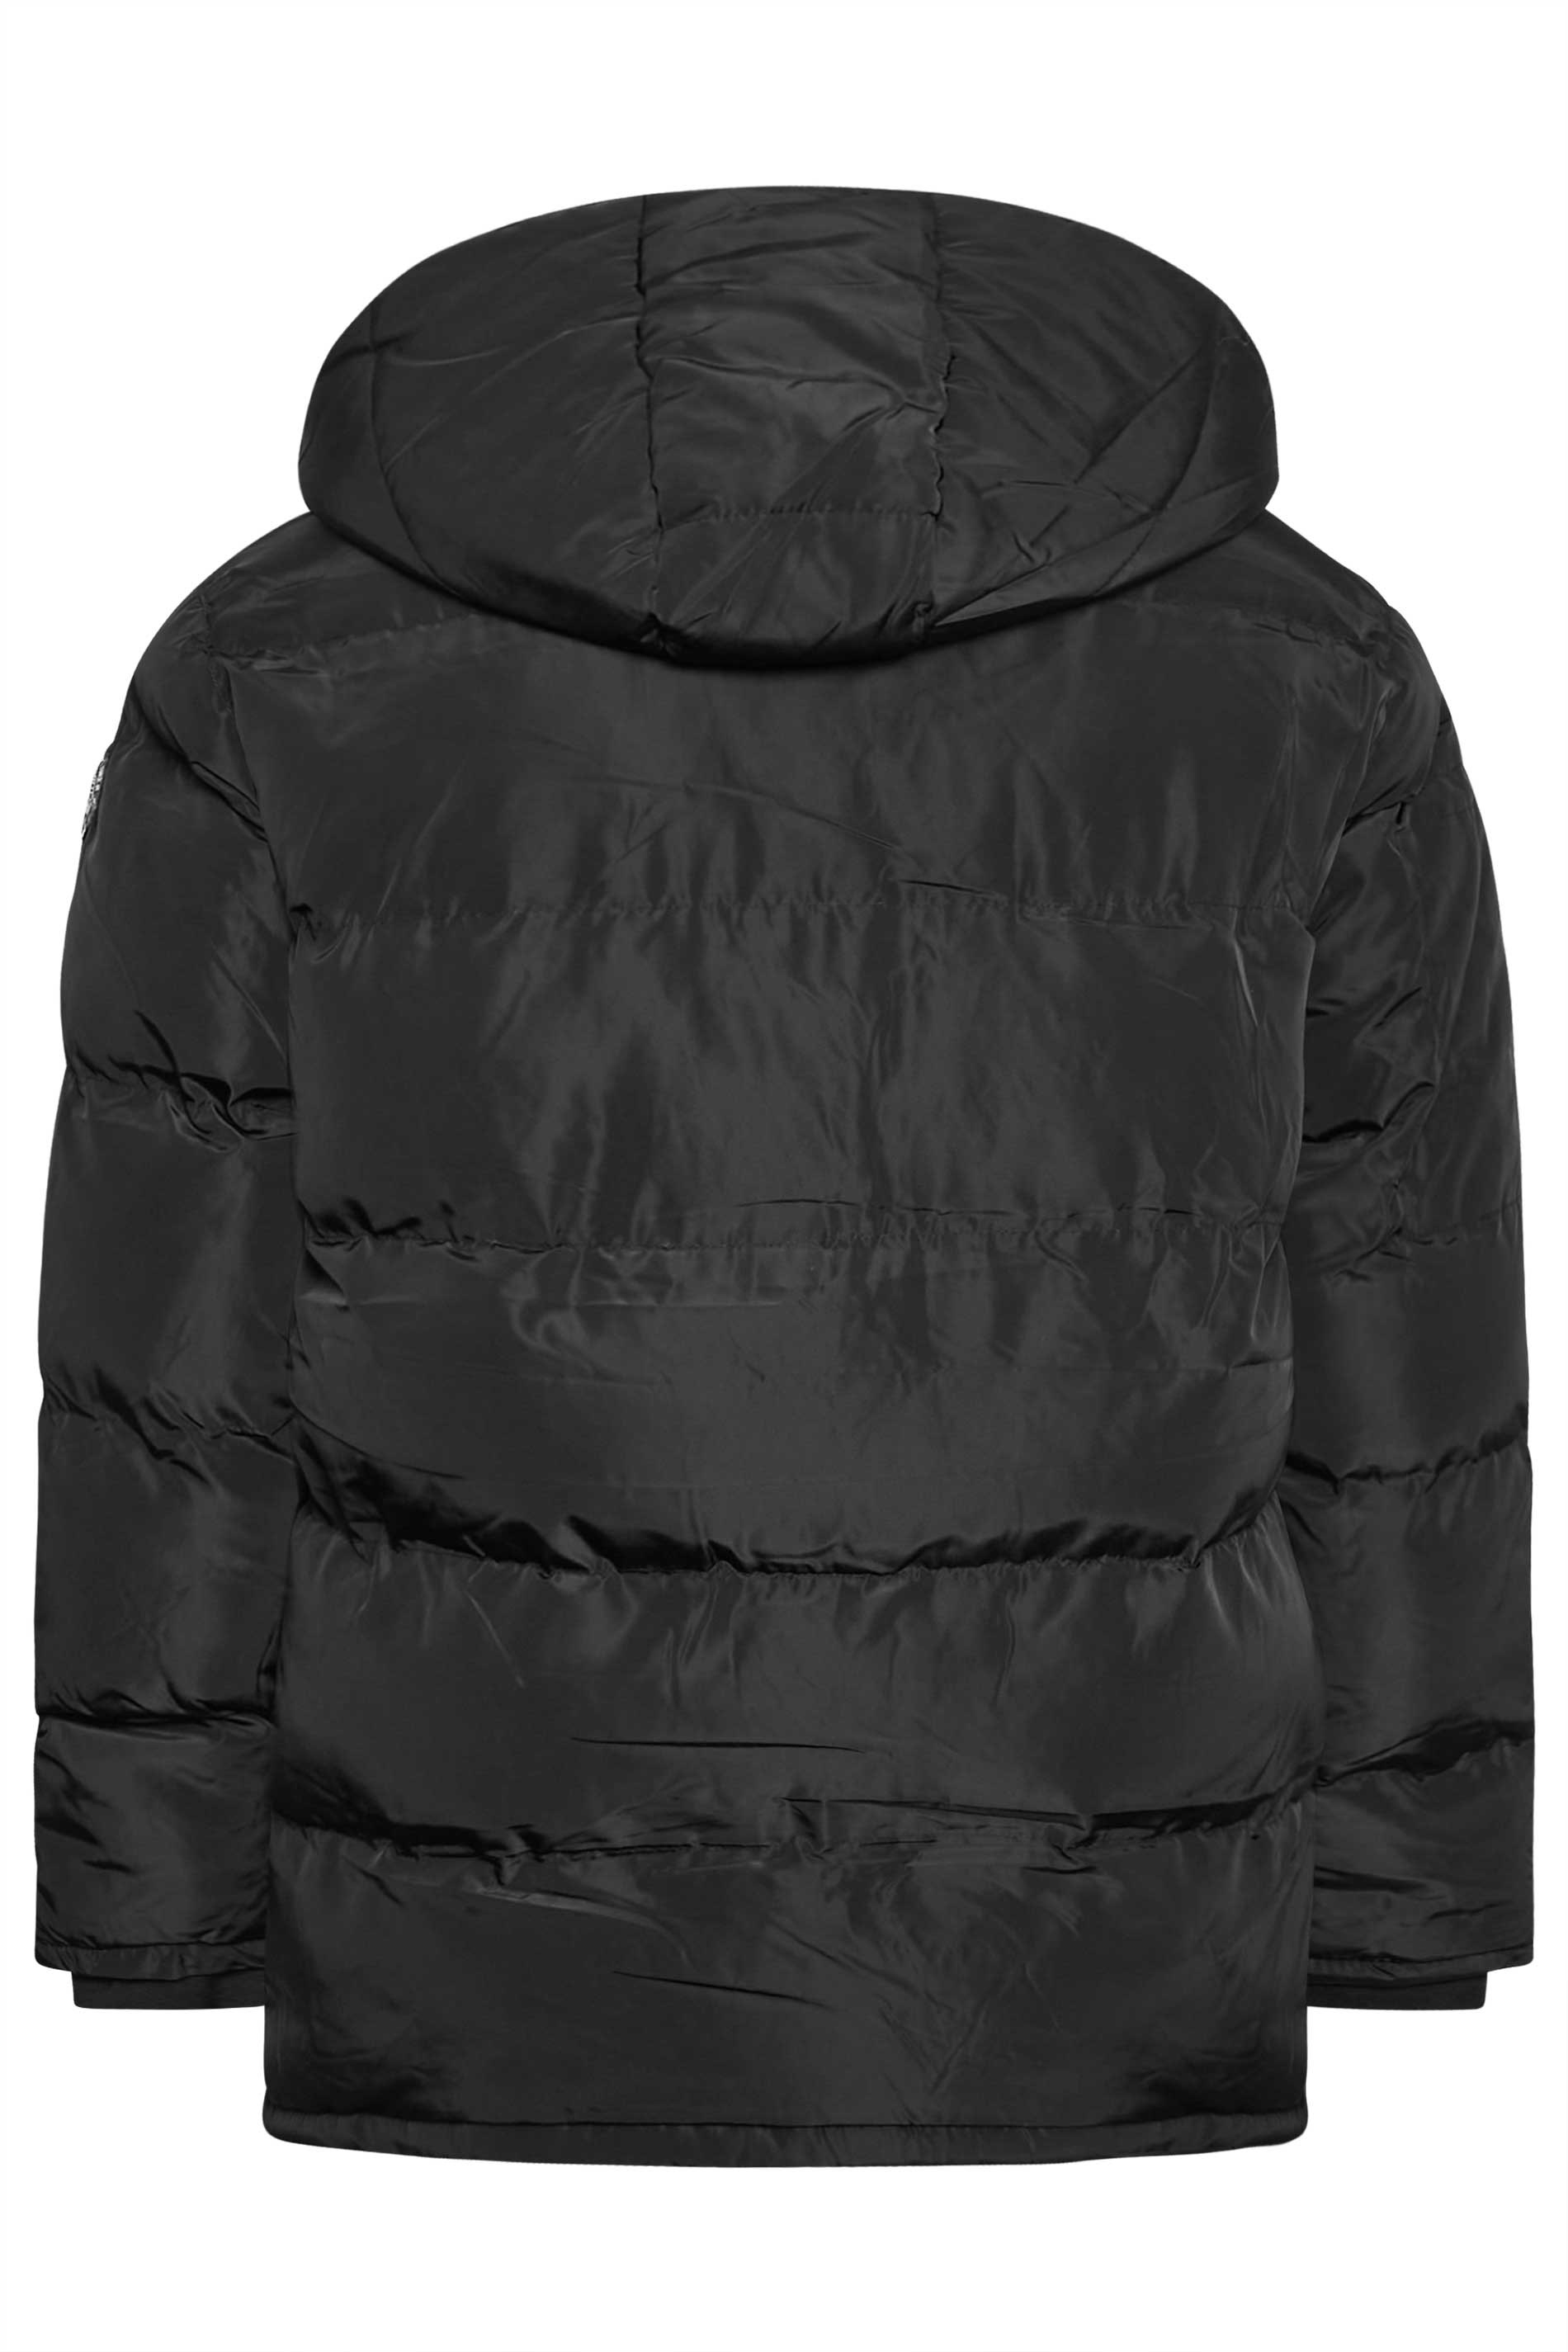 D555 Big & Tall Black Hooded Parka Coat | BadRhino 2